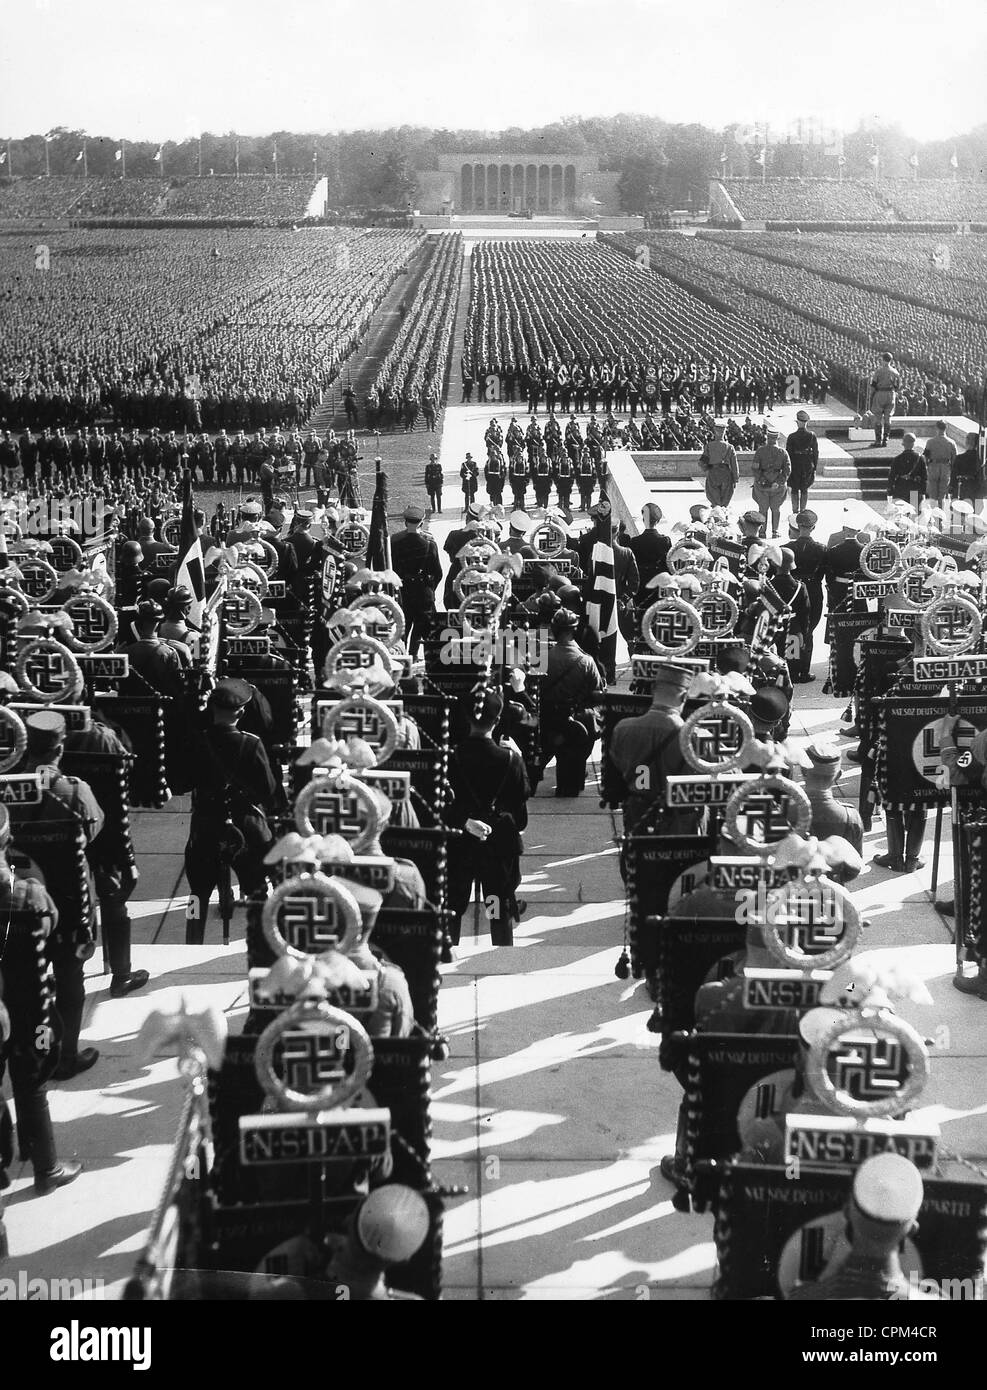 The Nuremberg Rally in Nuremberg, 1936 Stock Photo